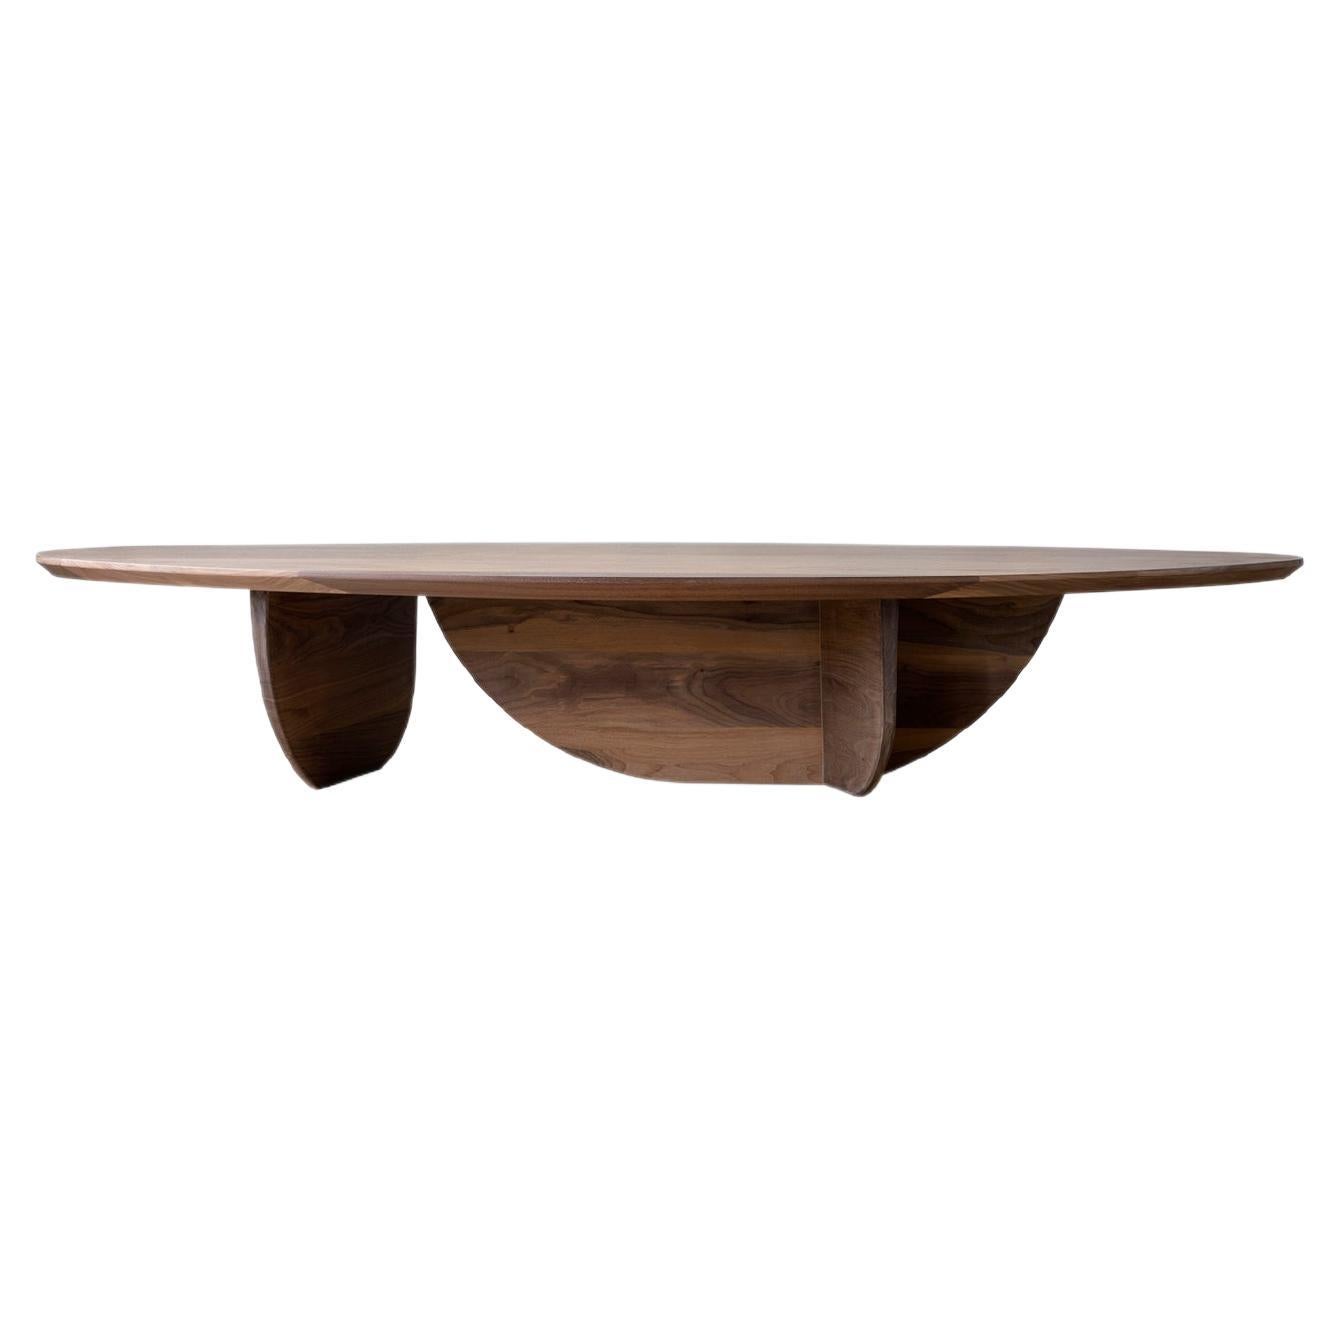 Table basse Pebble II d'Atra Design